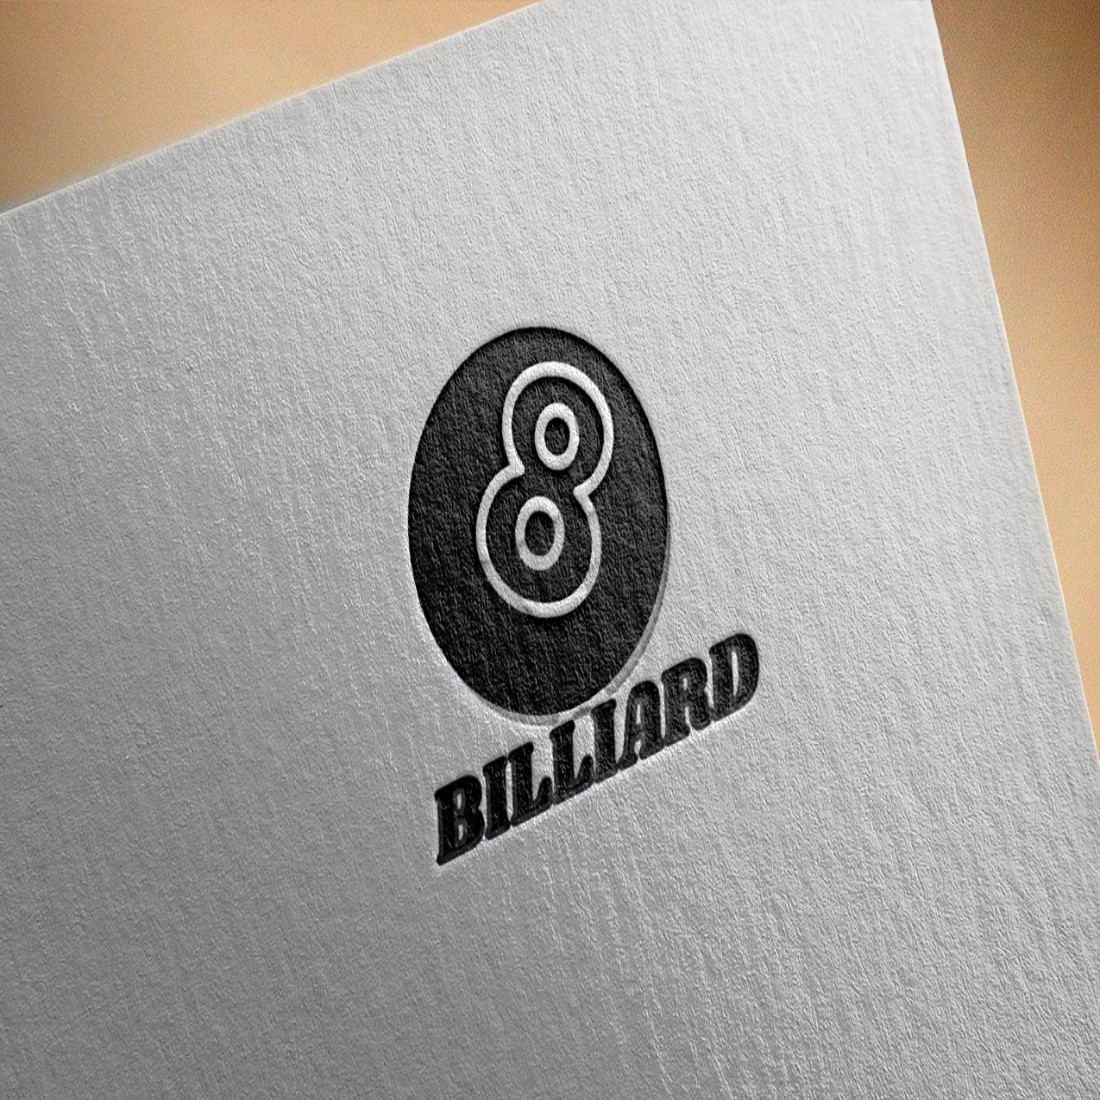 Billiard Logo Design mockup example preview.